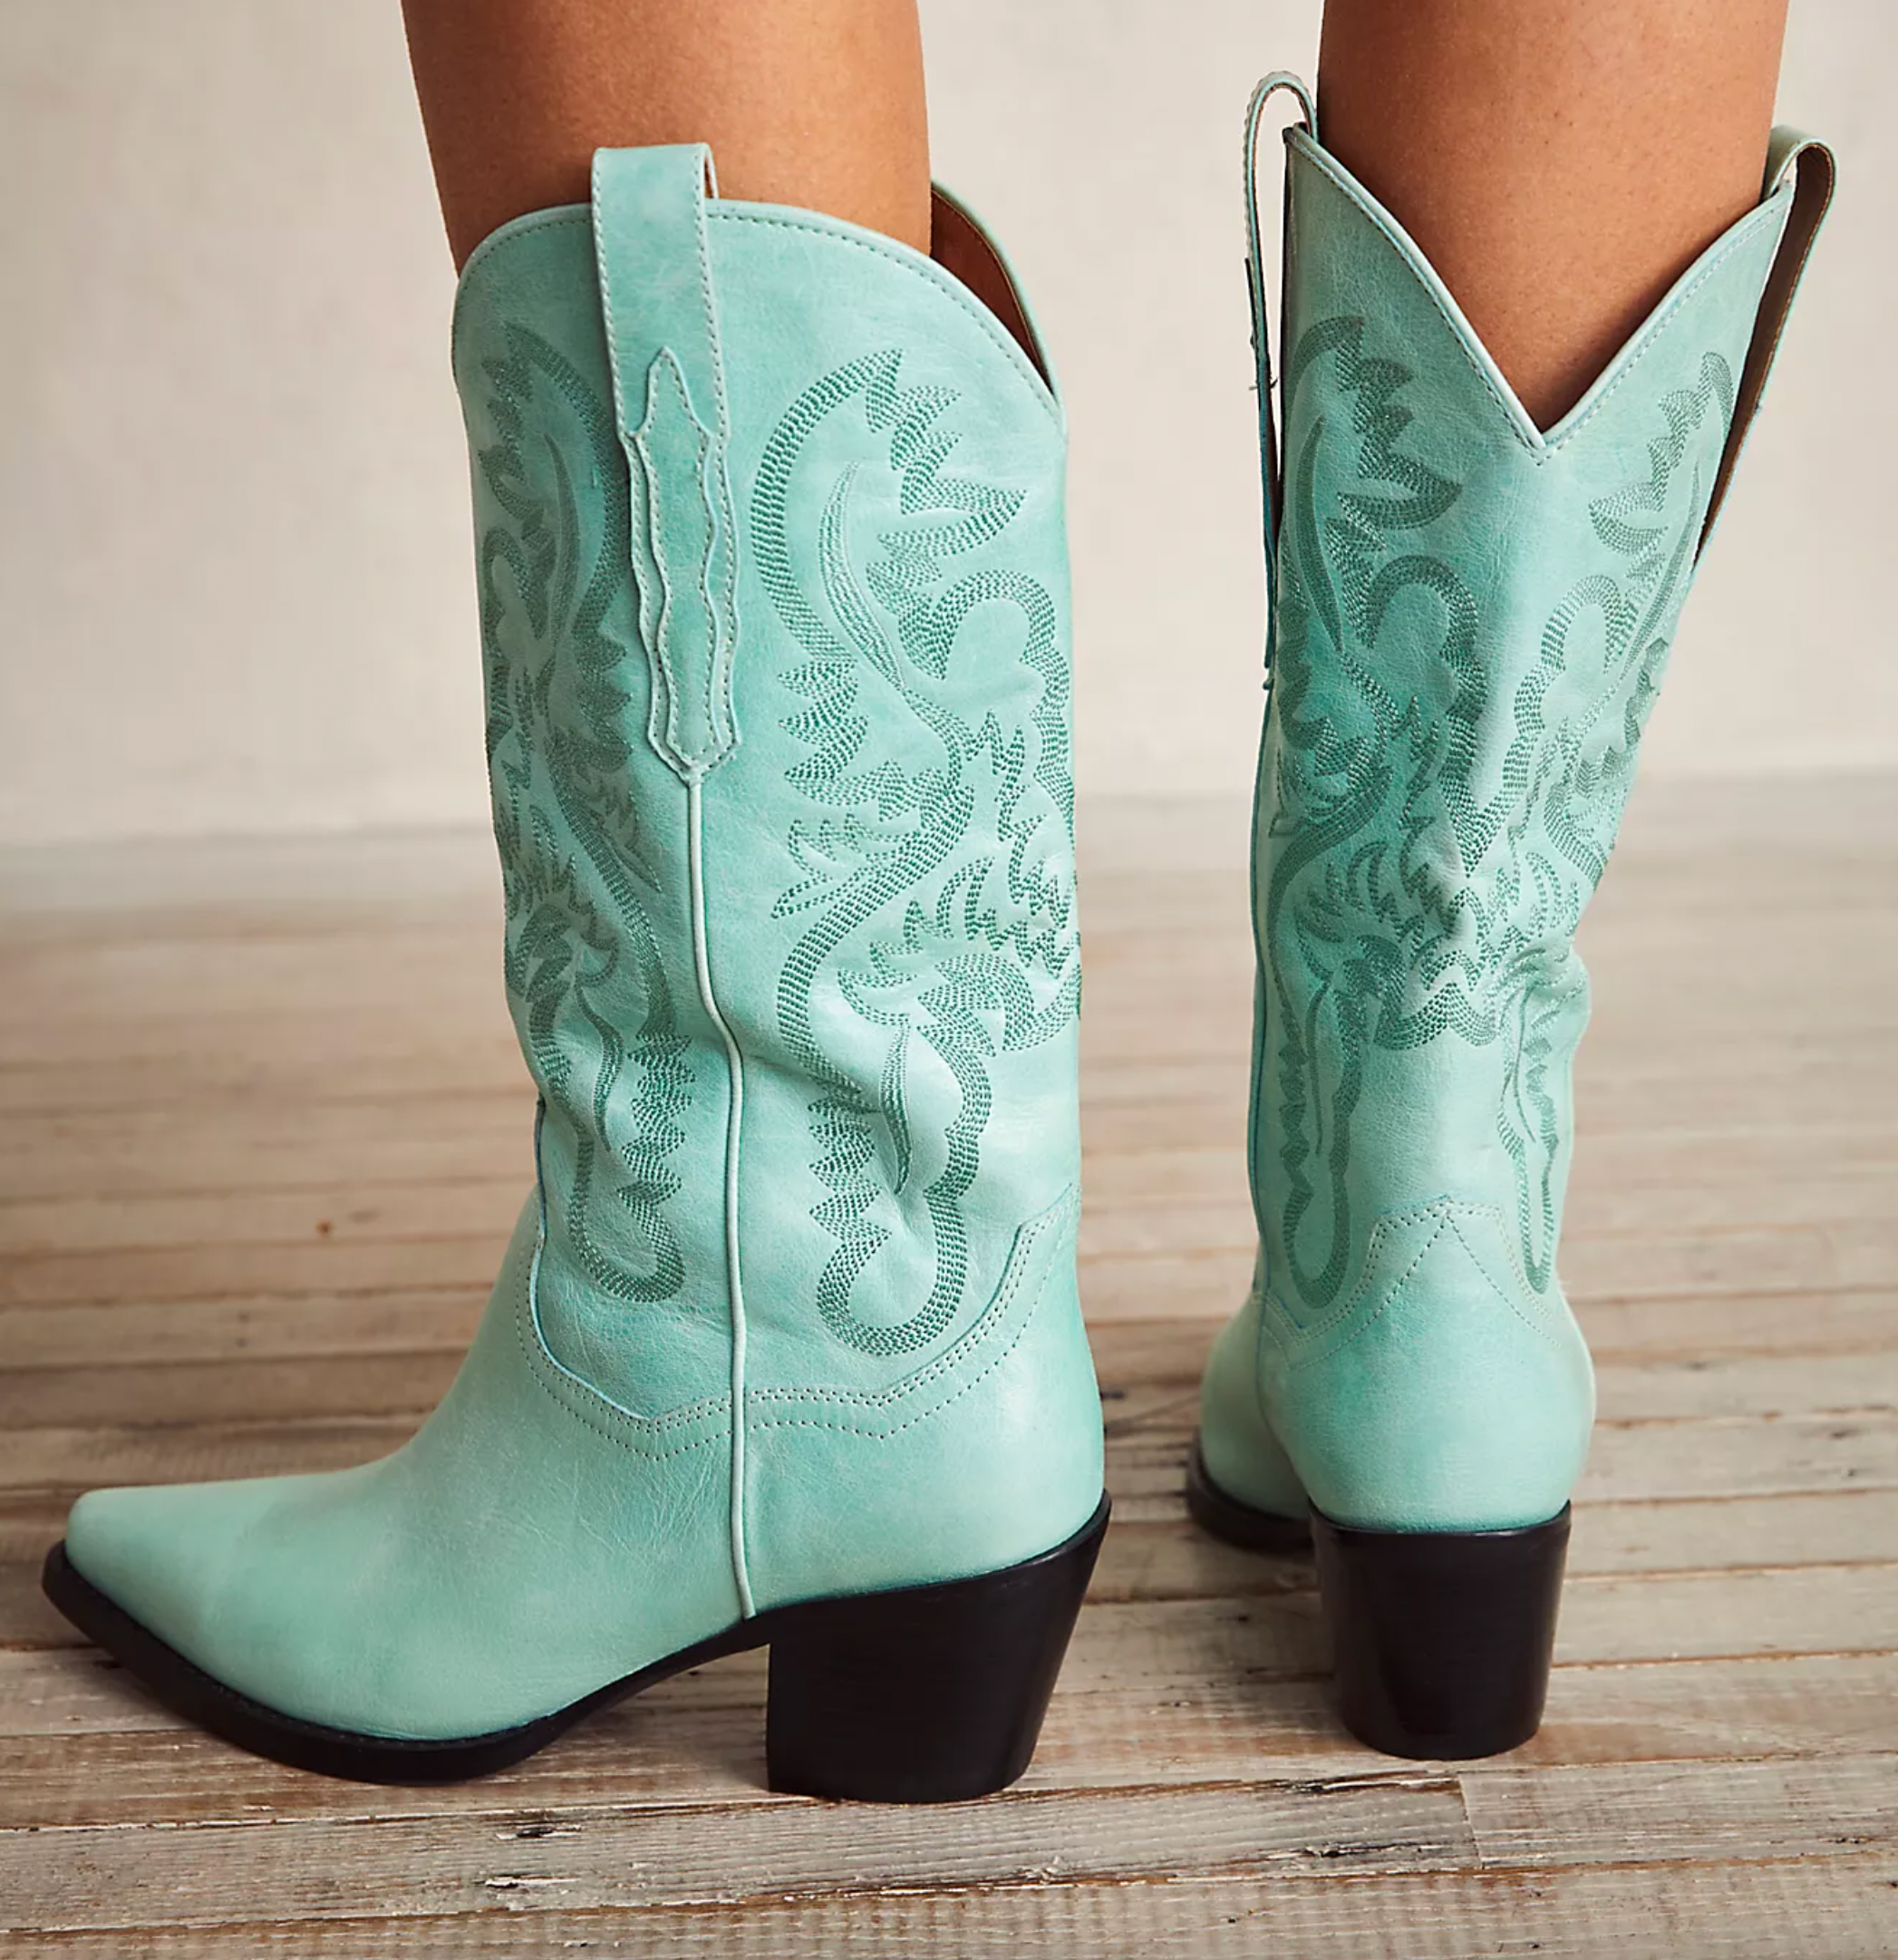 blue cowboy boots best fall shoes